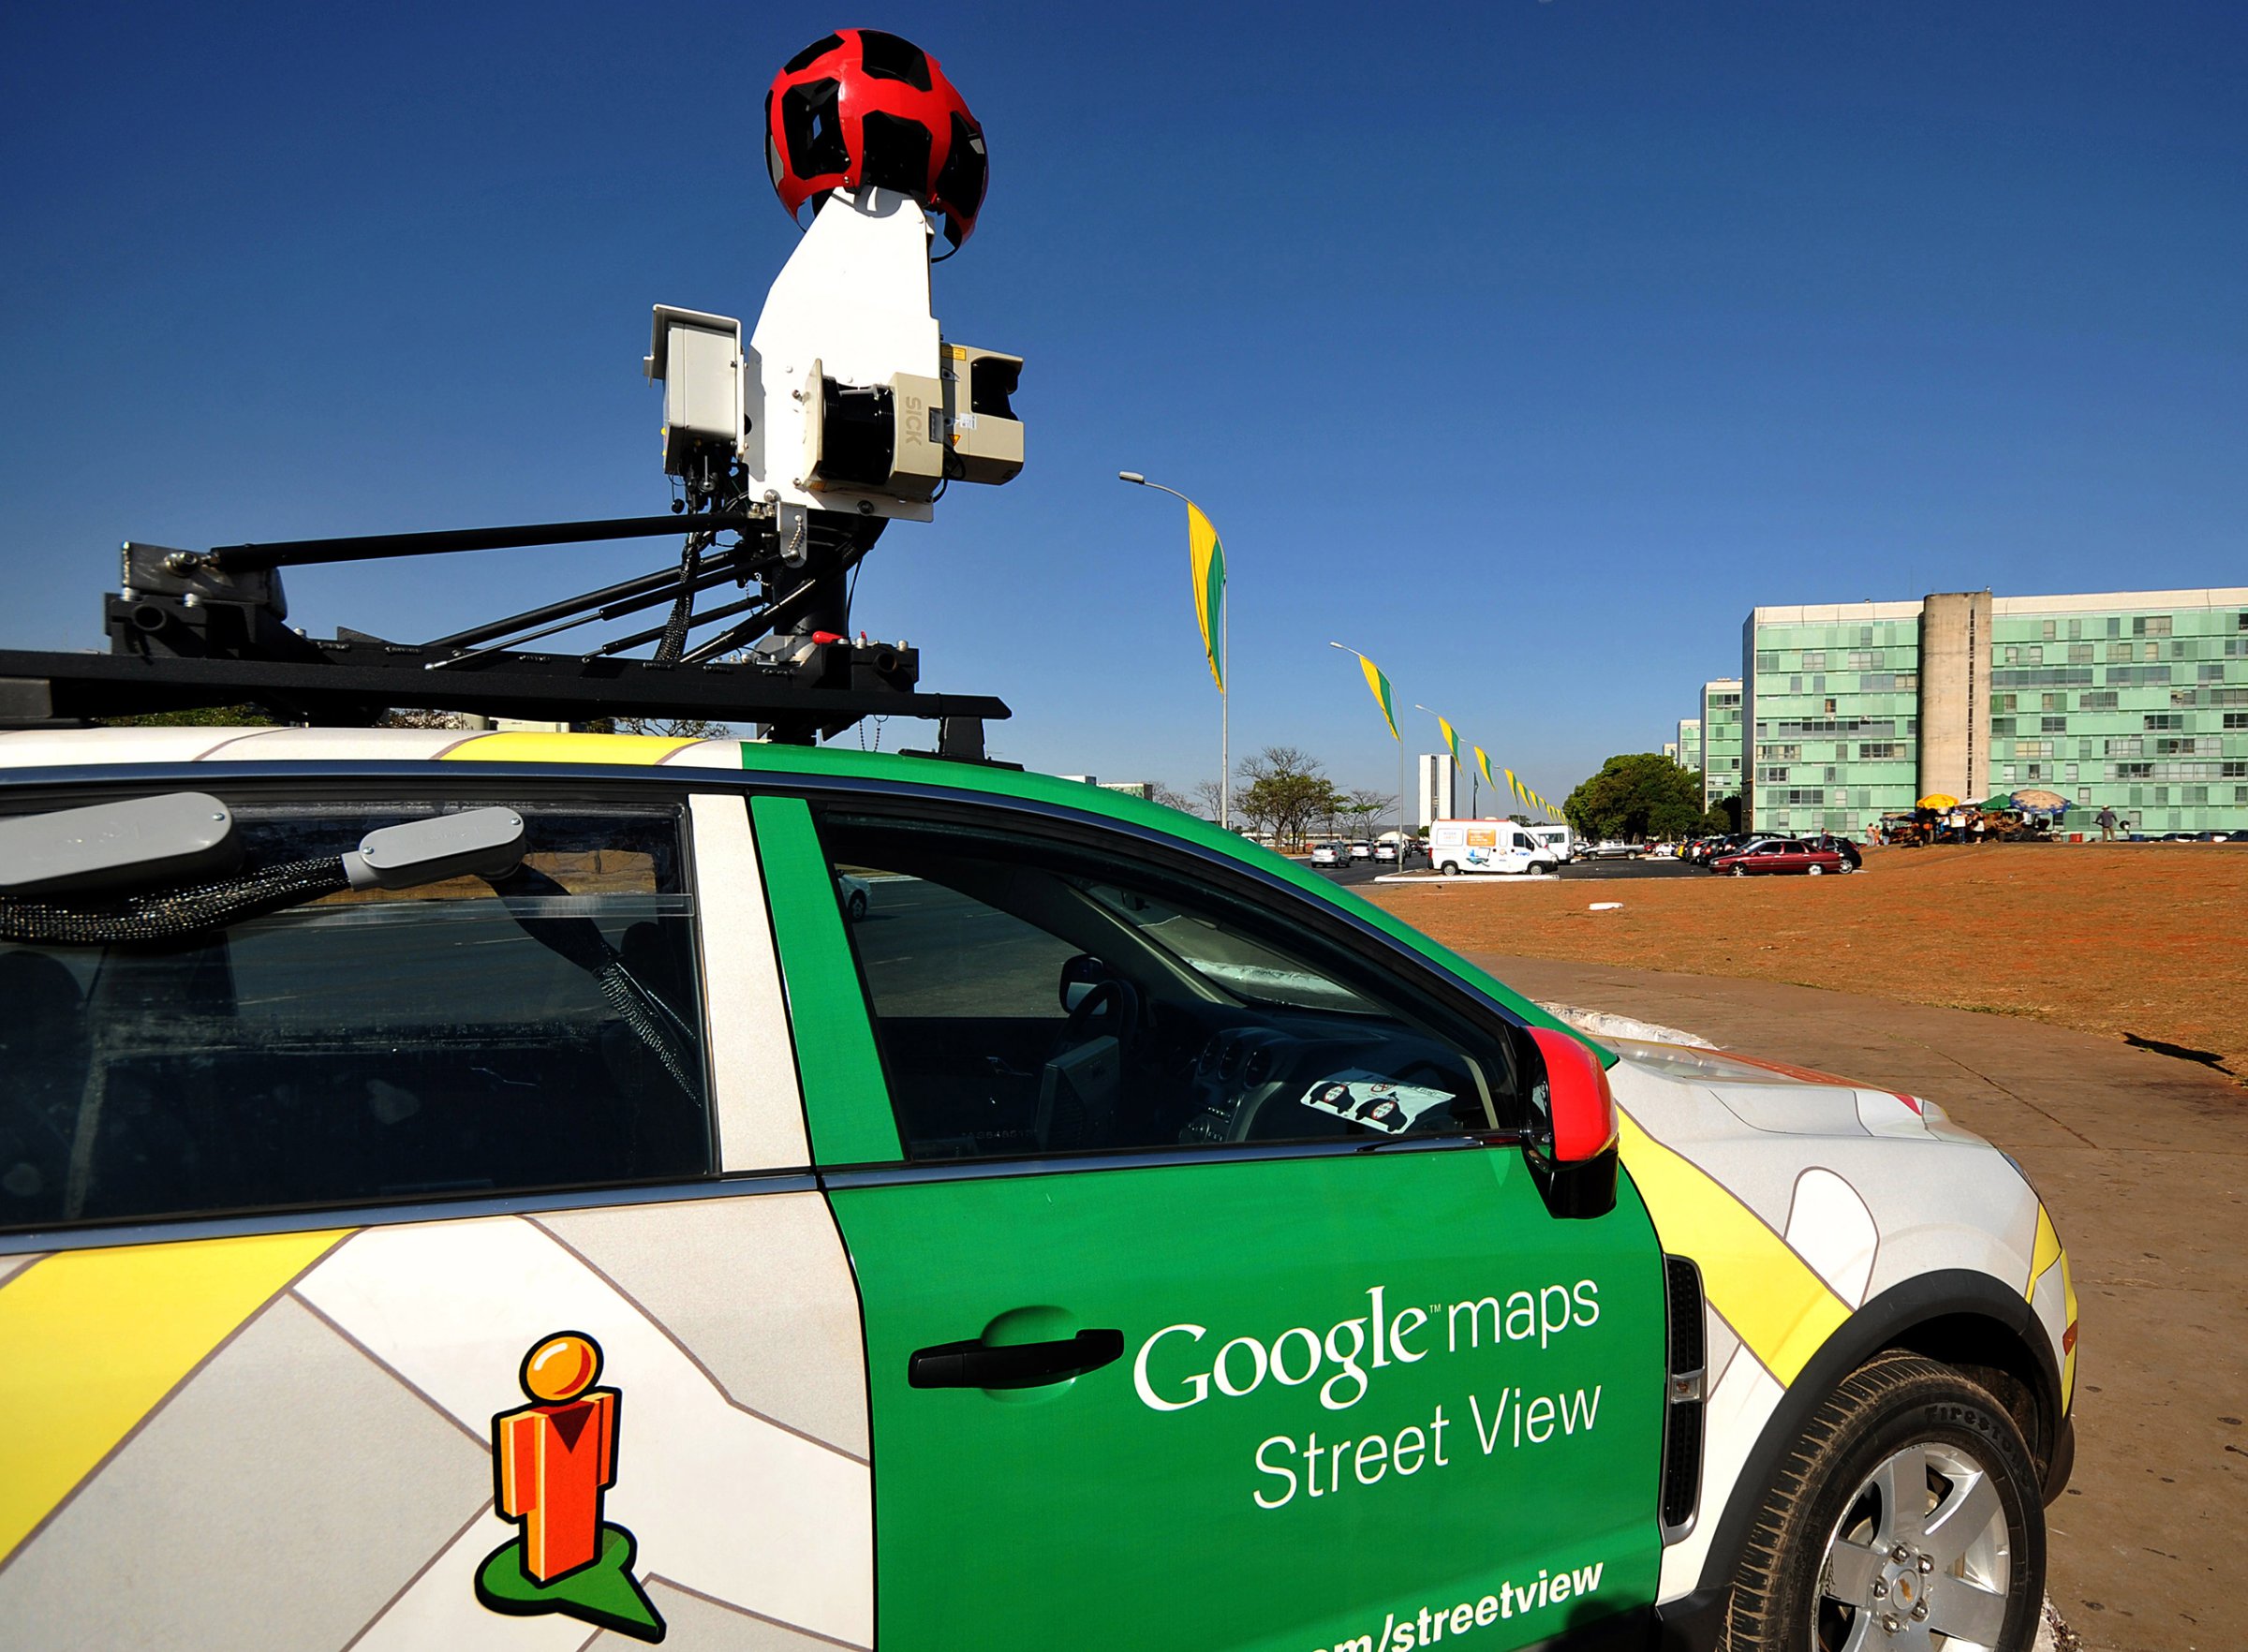 The Google street view car in the streets of Brasilia, Brazil, on Sept. 6, 2011.